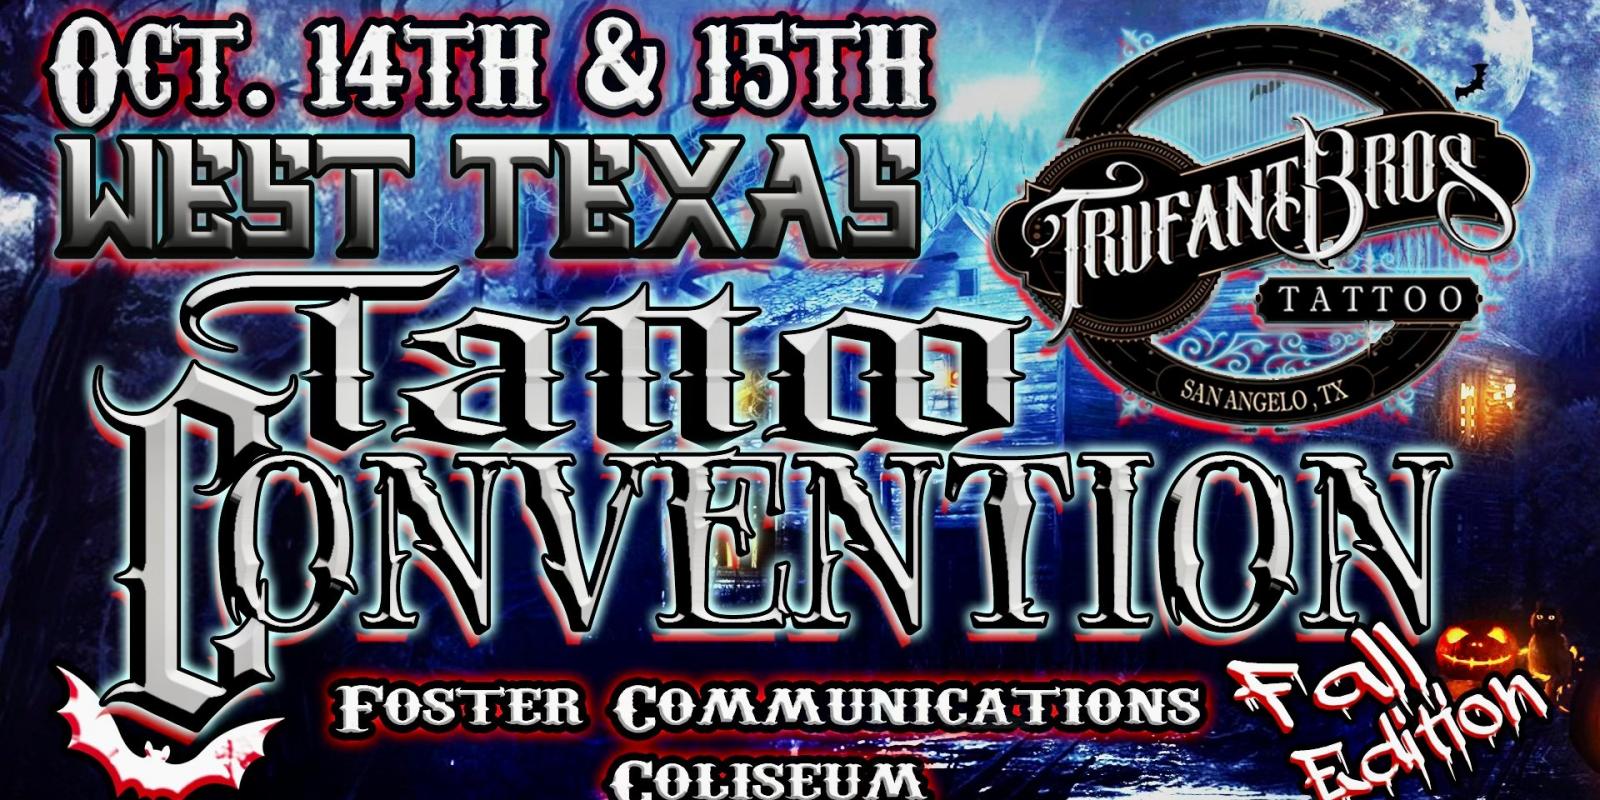 Twelfth Annual West Texas Tattoo Convention continues through Sun   myfoxzonecom